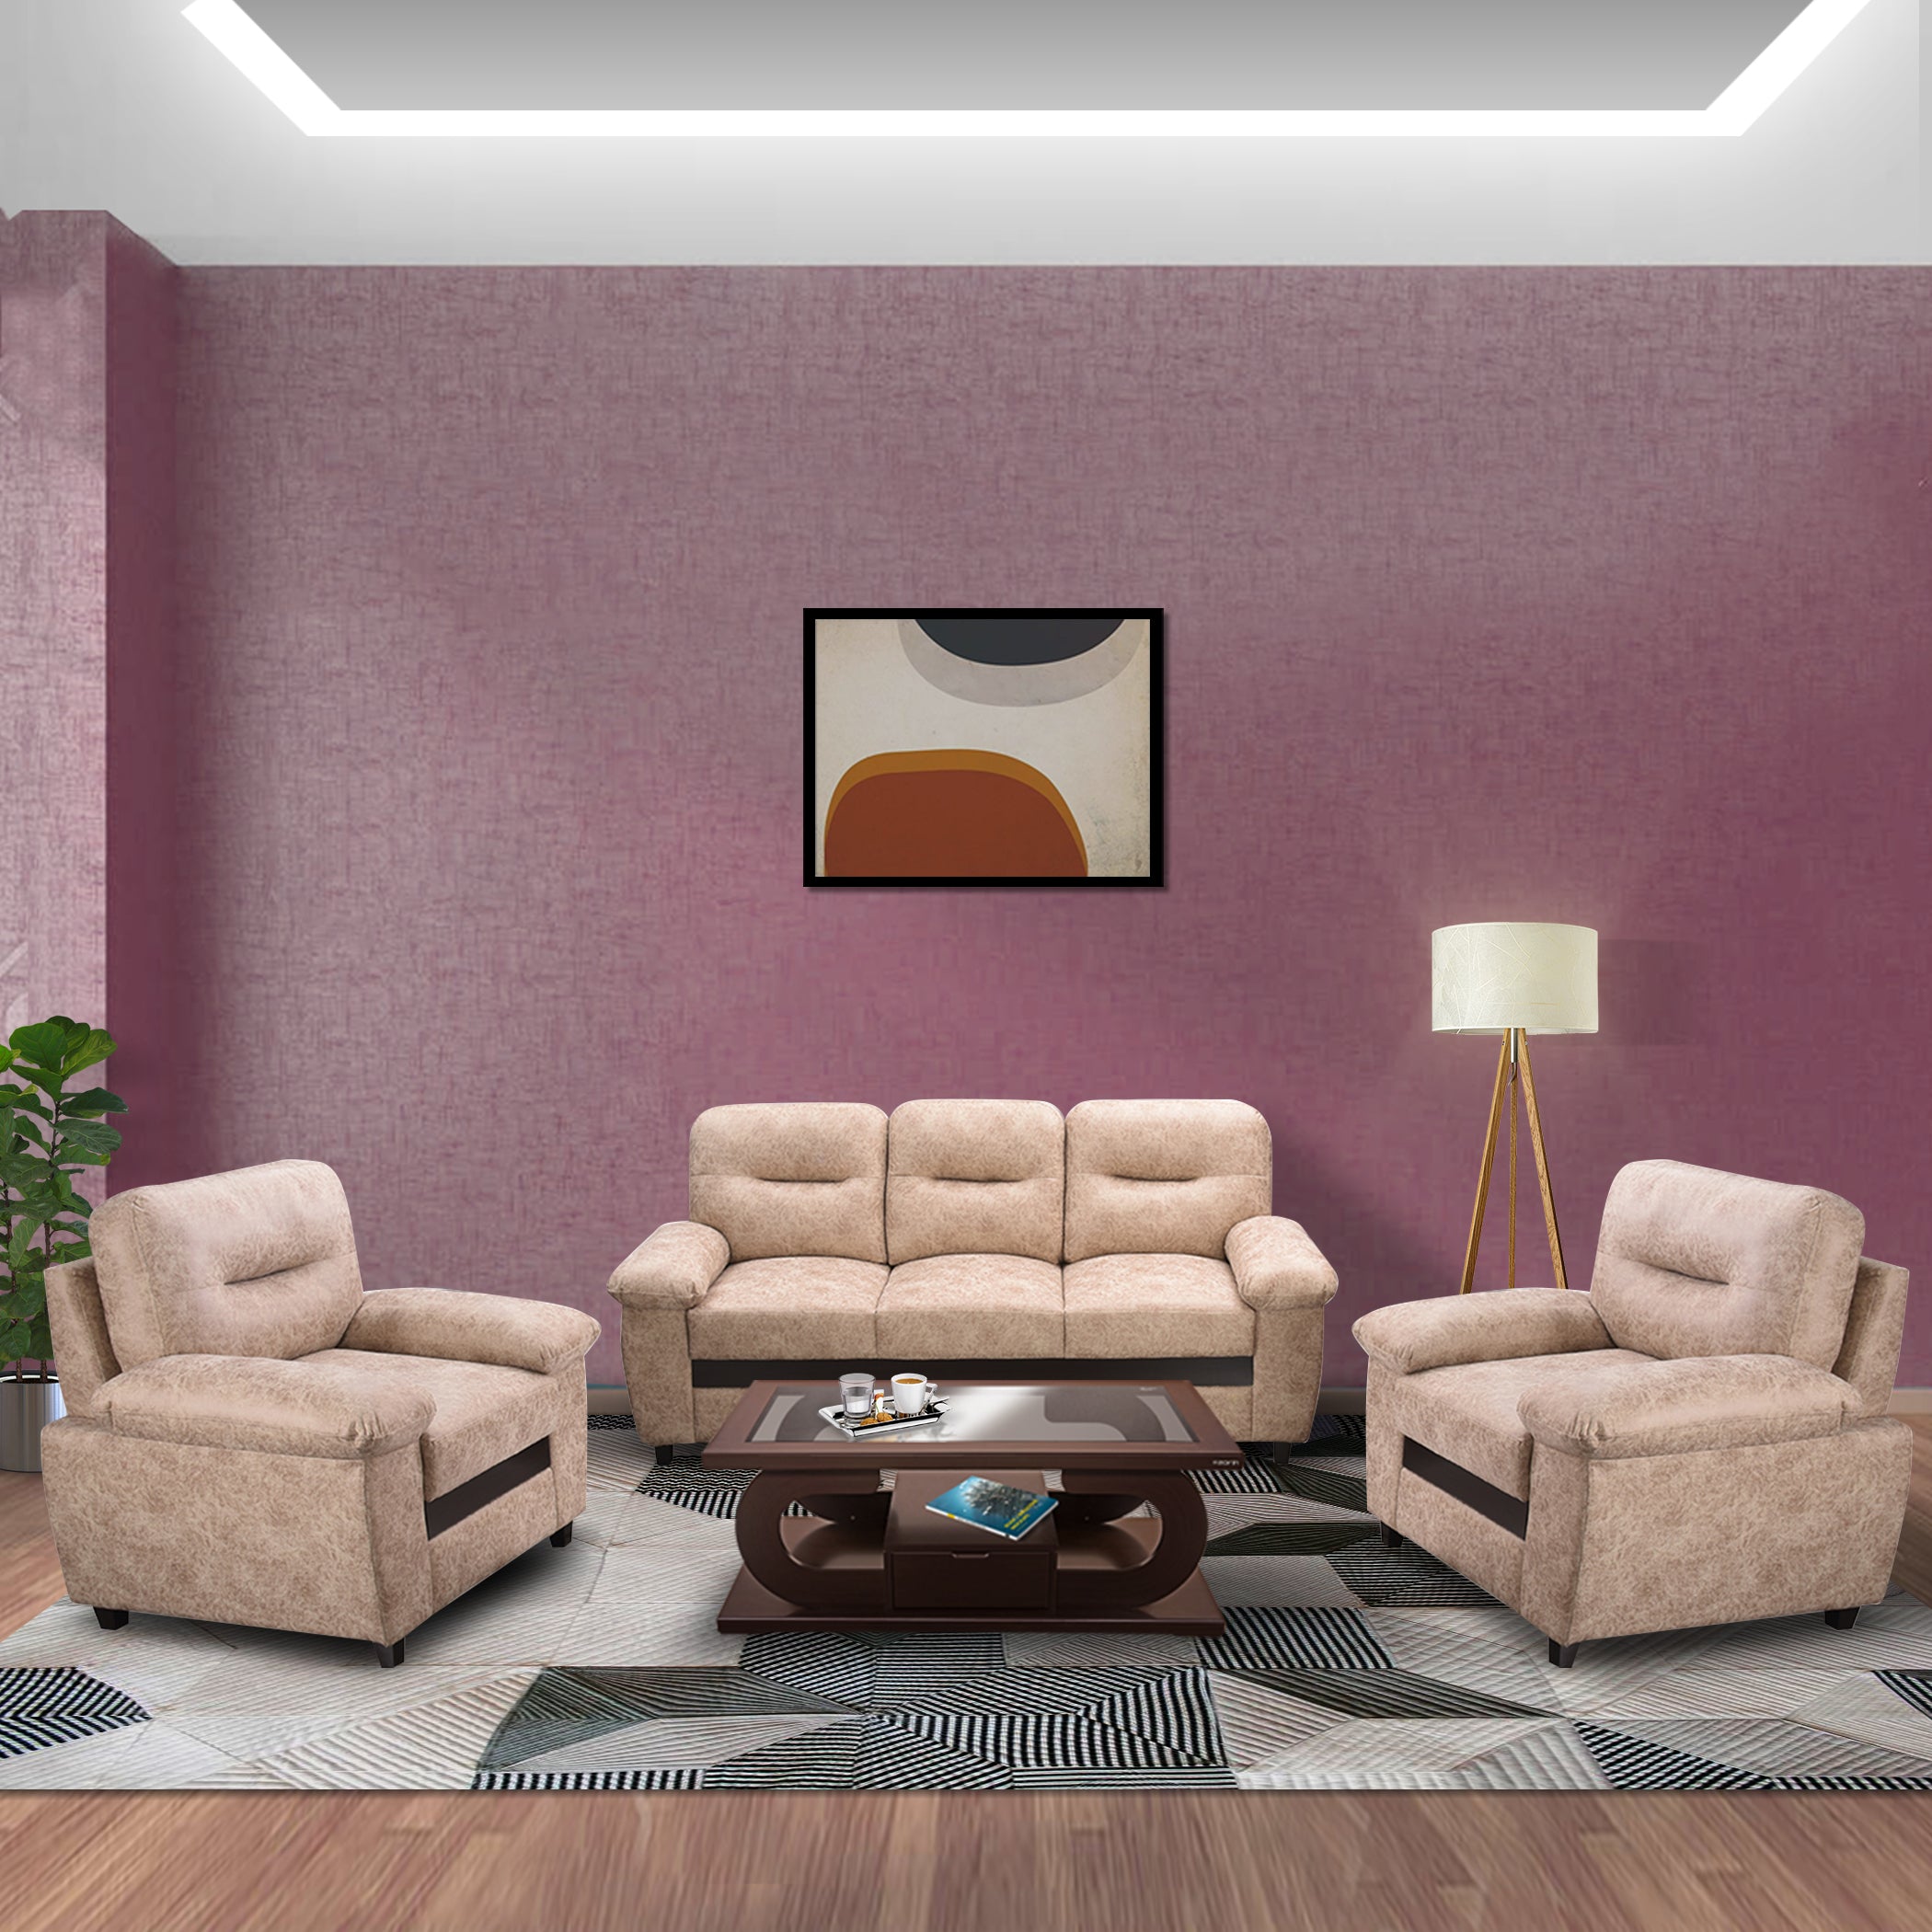 Berlin TexturedWhite 1S Sofa by Zorin Zorin